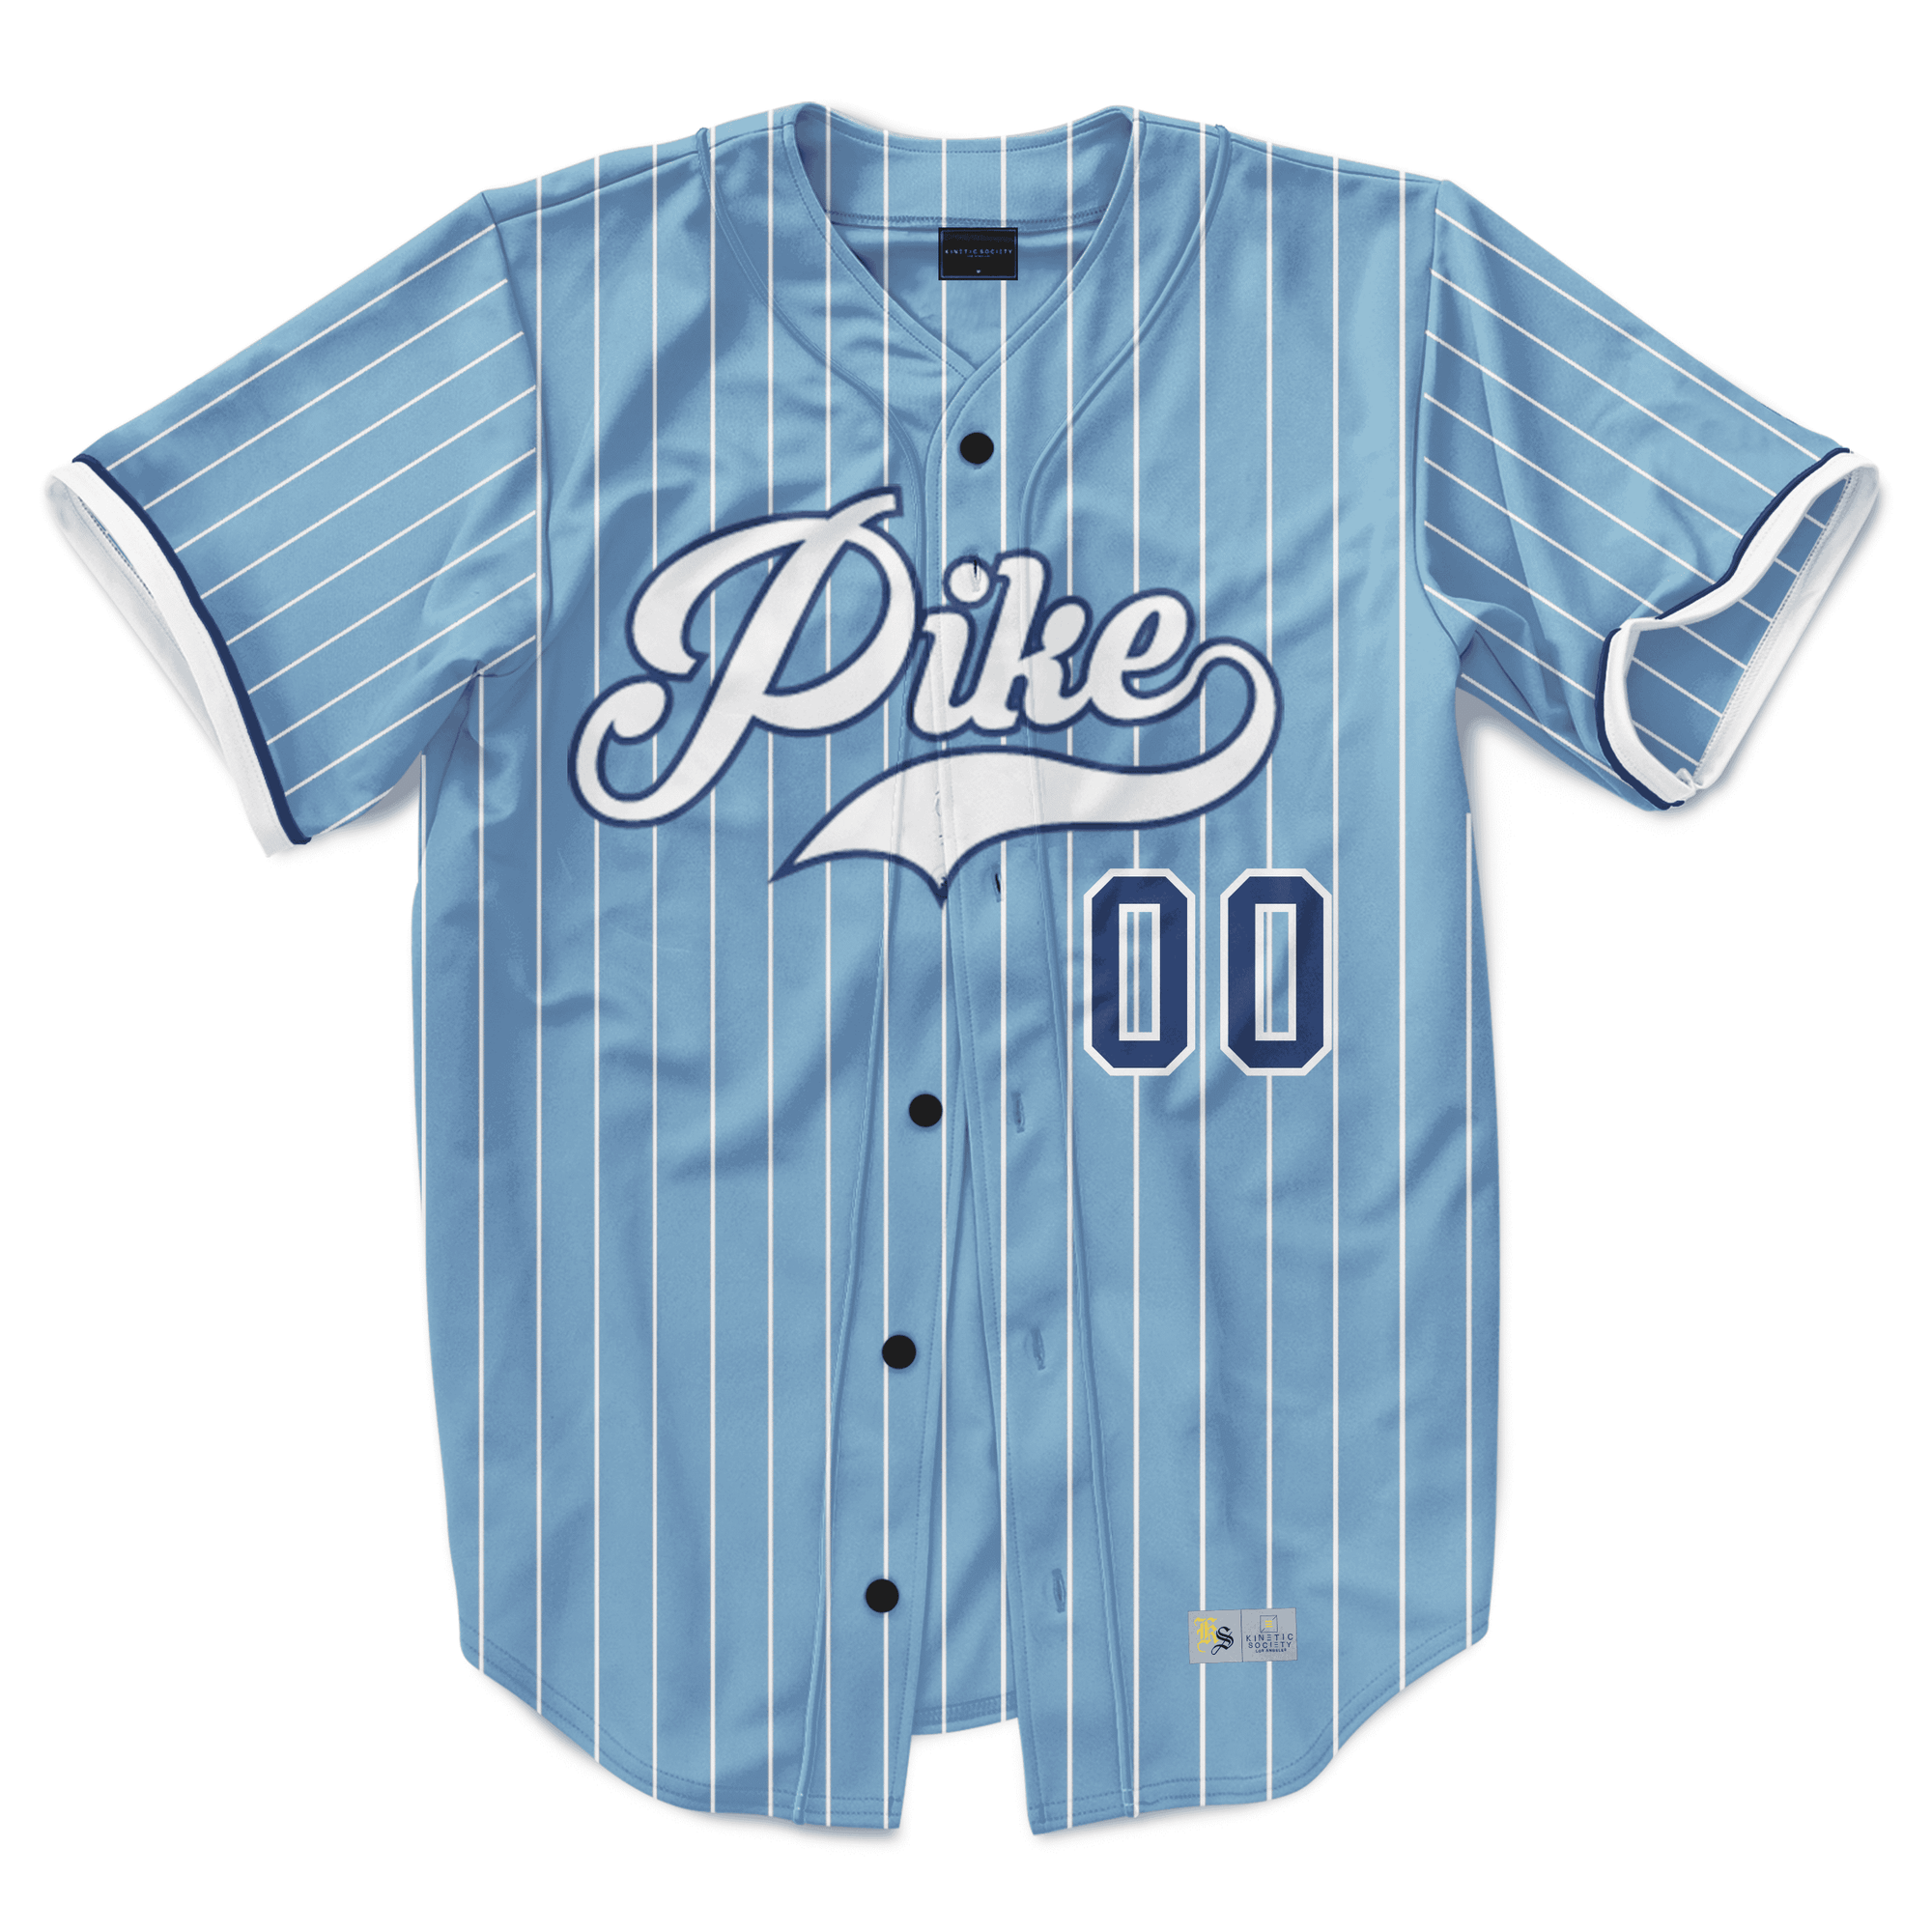 Pi Kappa Alpha - Blue Shade Baseball Jersey